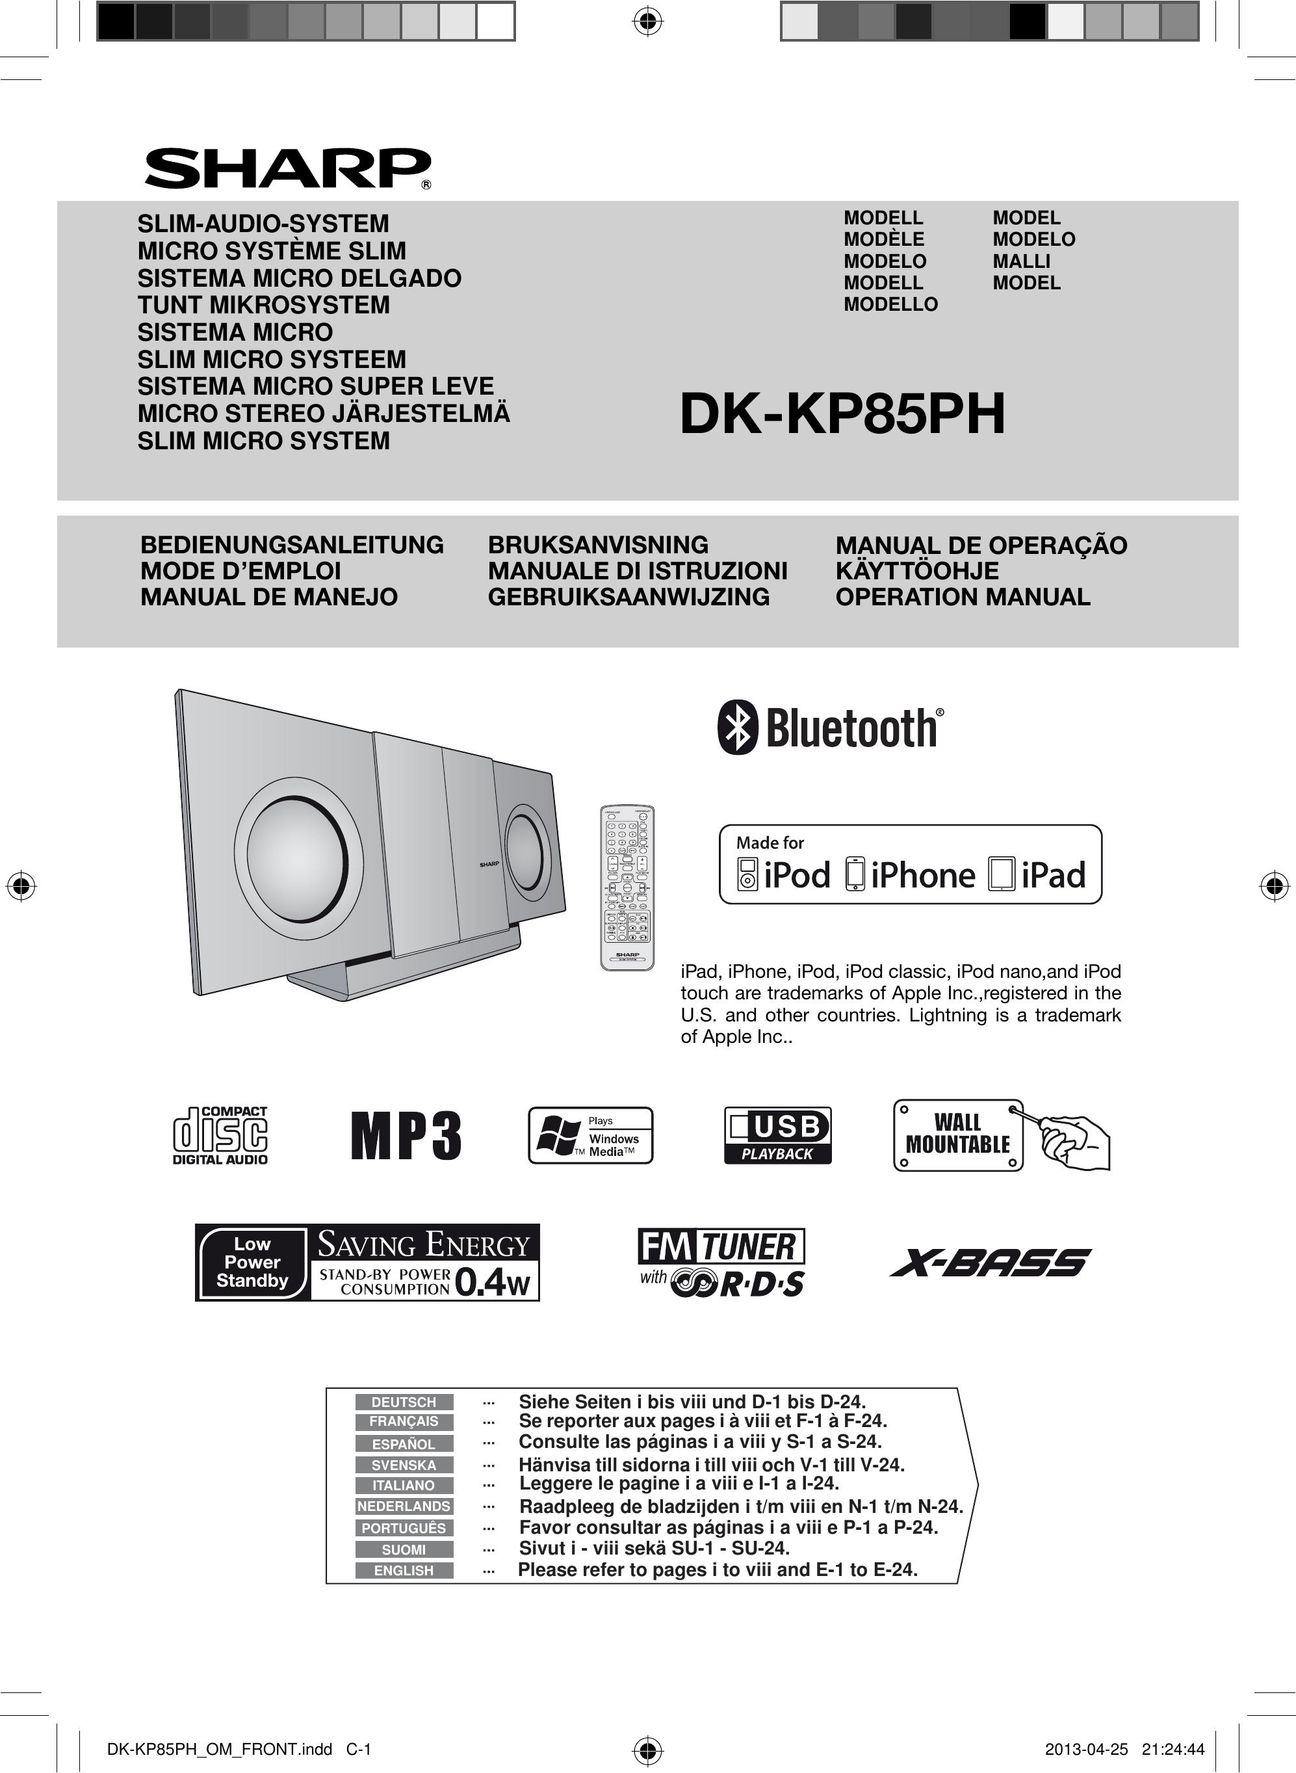 Sharp DK-KP85PH Portable CD Player User Manual